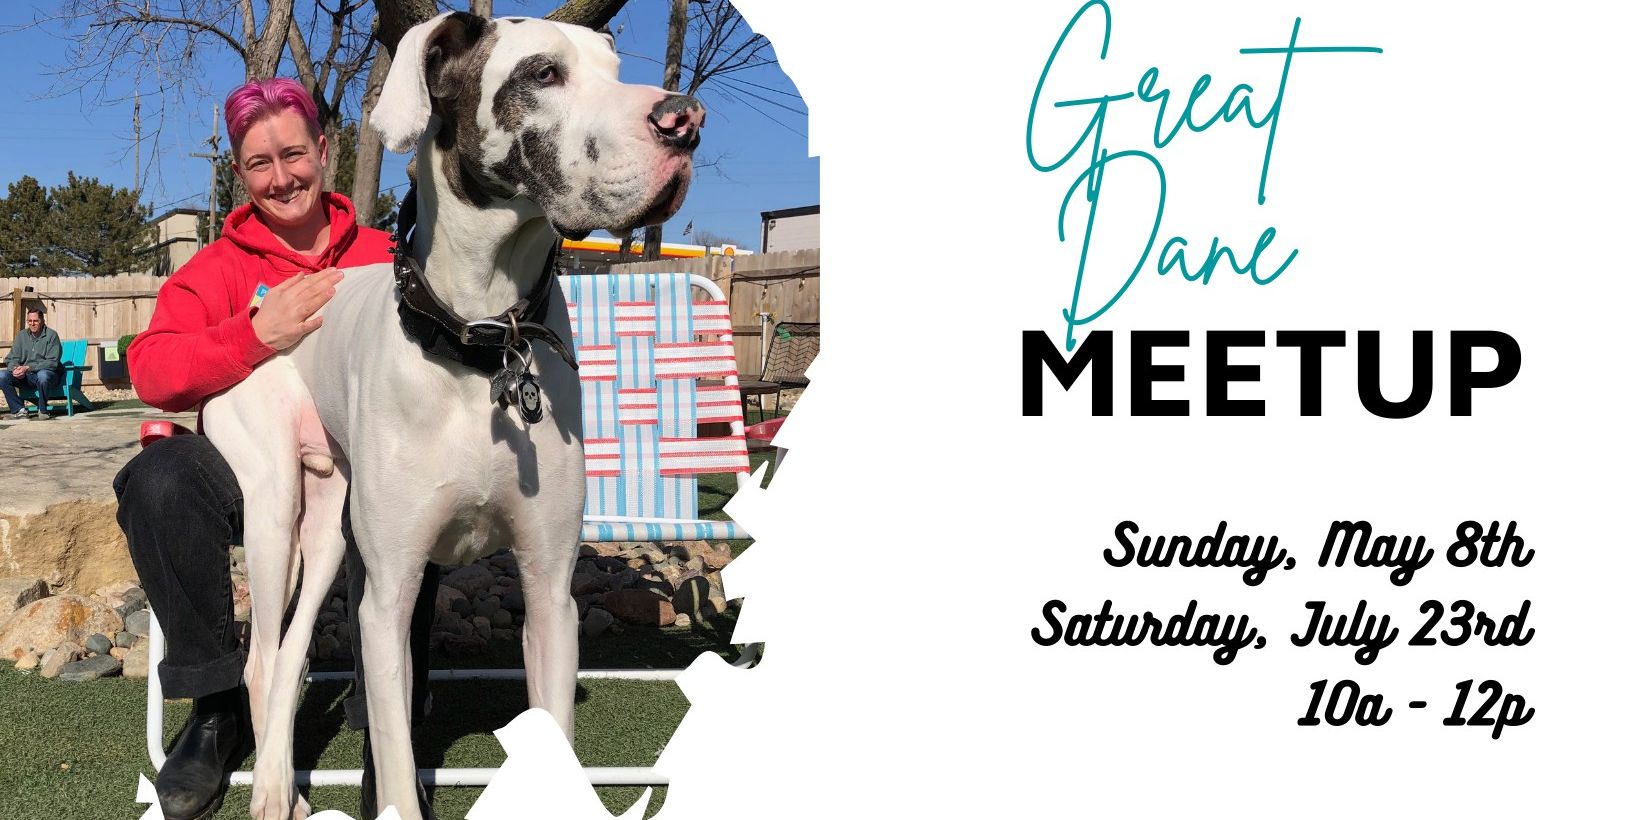 Great Dane Meetup at Omaha Dog Bar promotional image